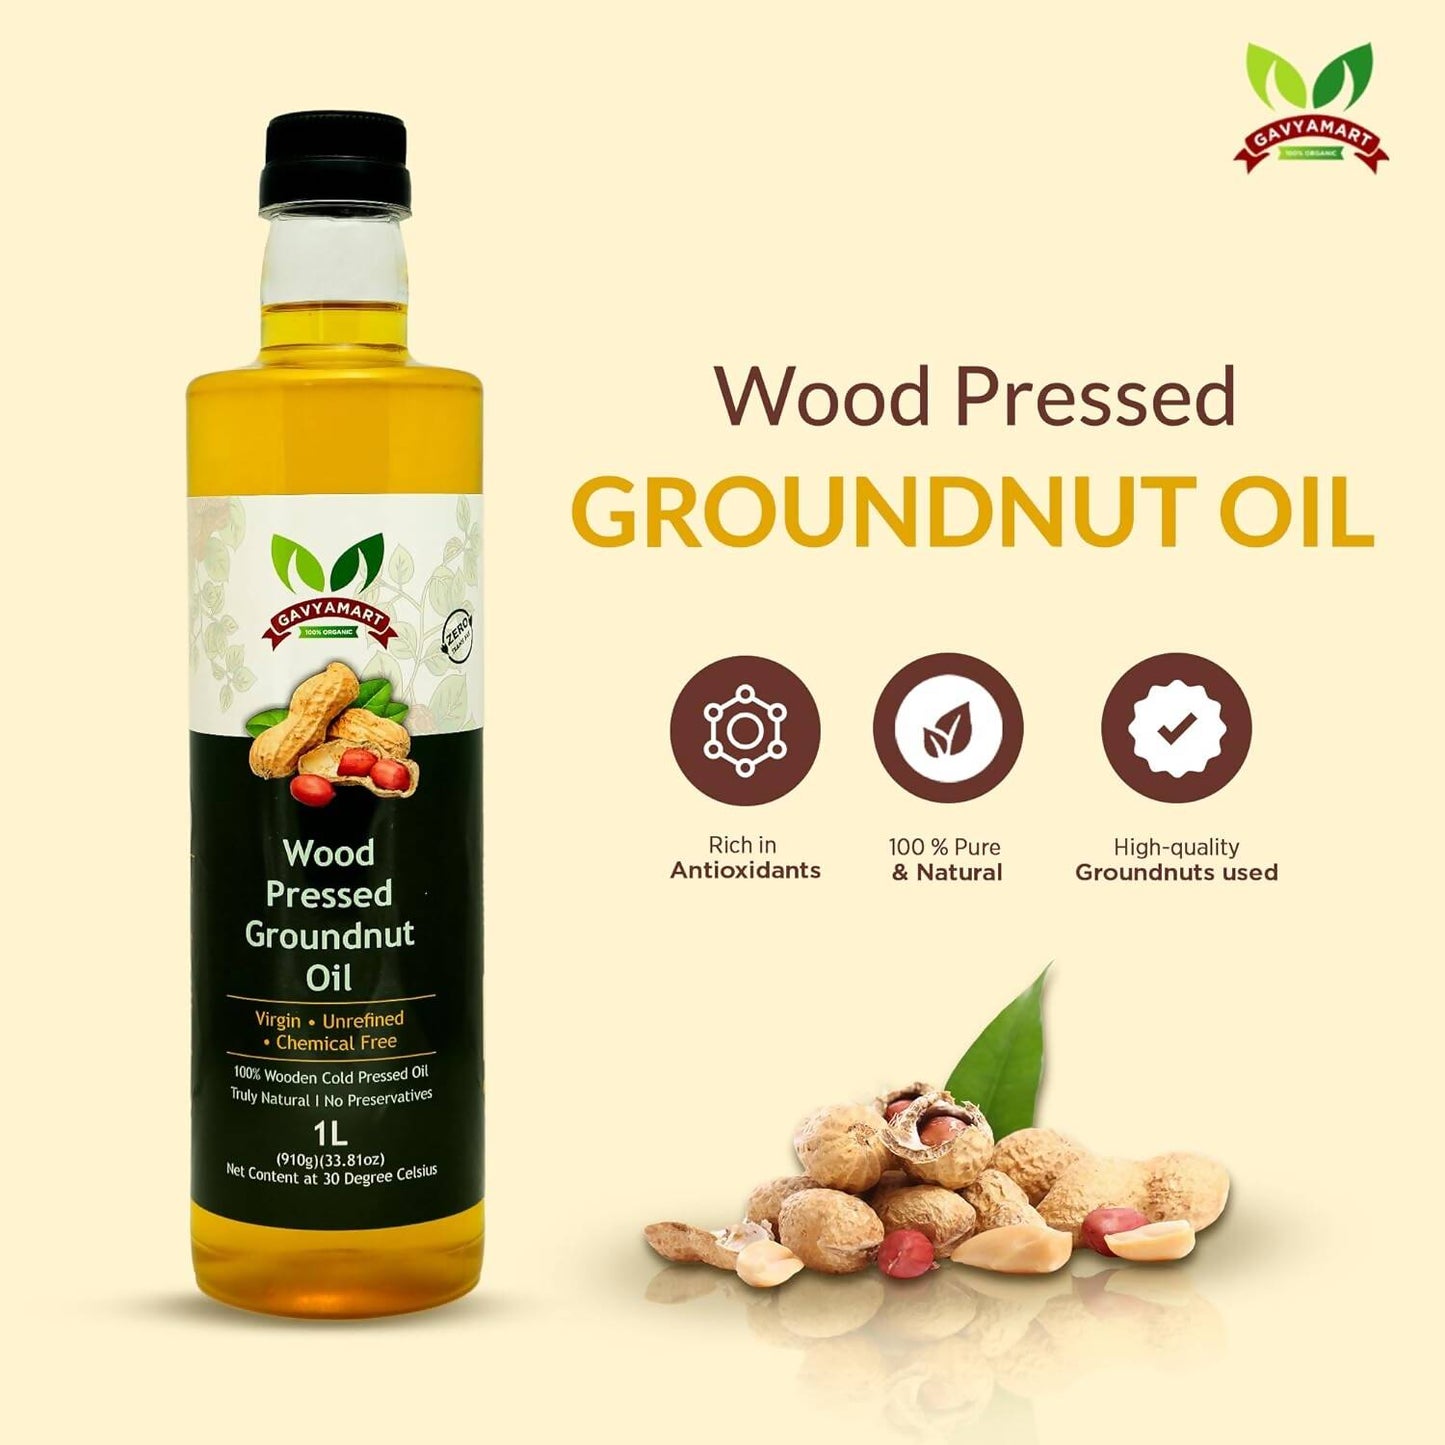 Gavyamart Wood Pressed Groundnut Oil